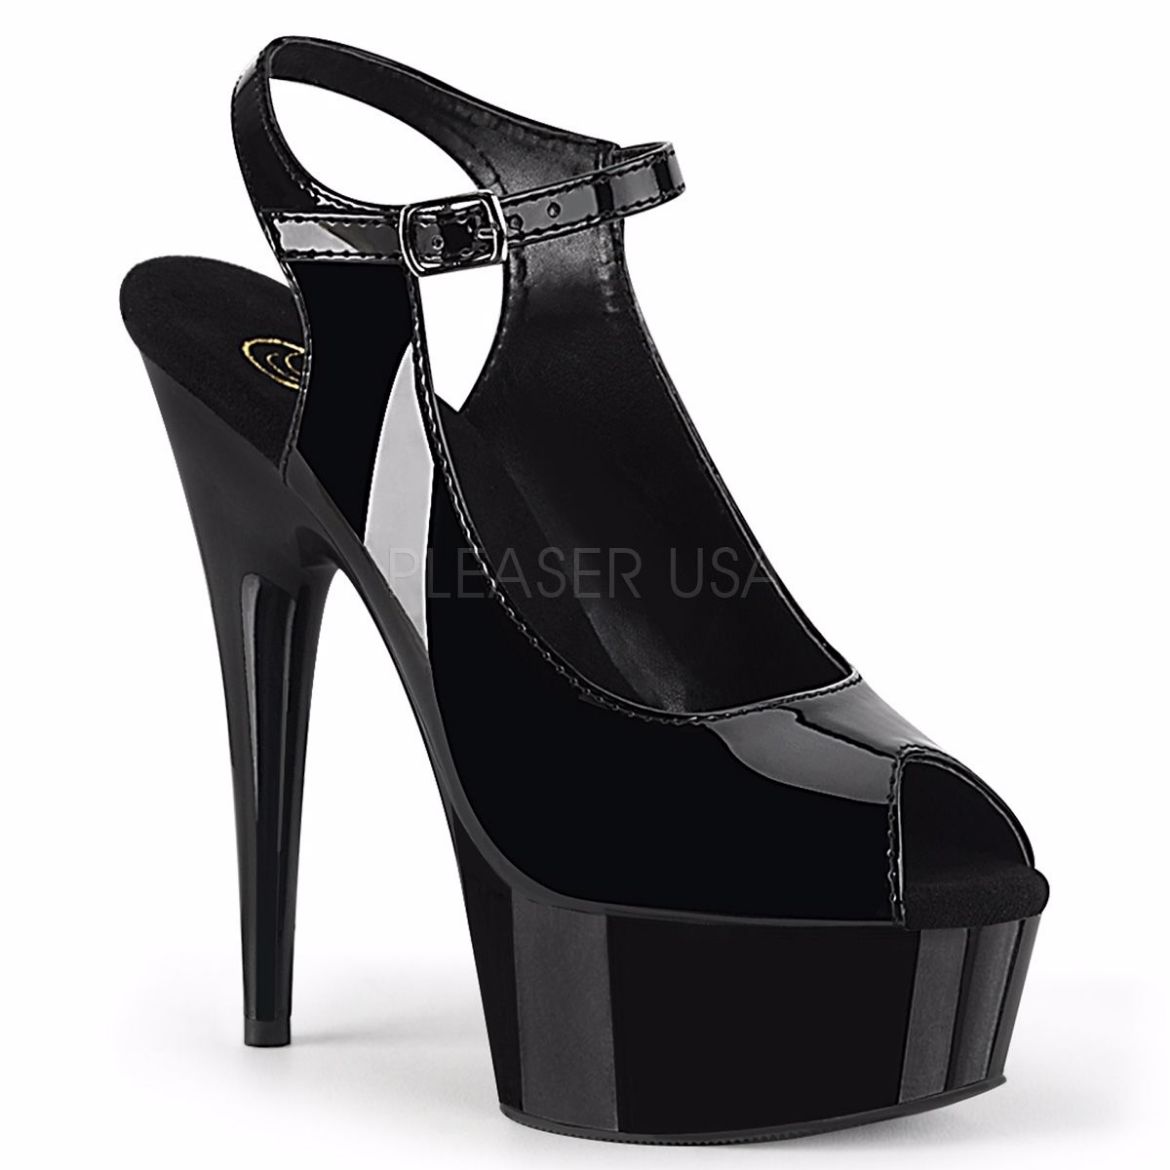 Product image of Pleaser DELIGHT-655 Black Patent/Black 6 inch (15.2 cm) Heel 1 3/4 inch (4.5 cm) Platform Peep Toe Ankle Strap Sandal Shoes